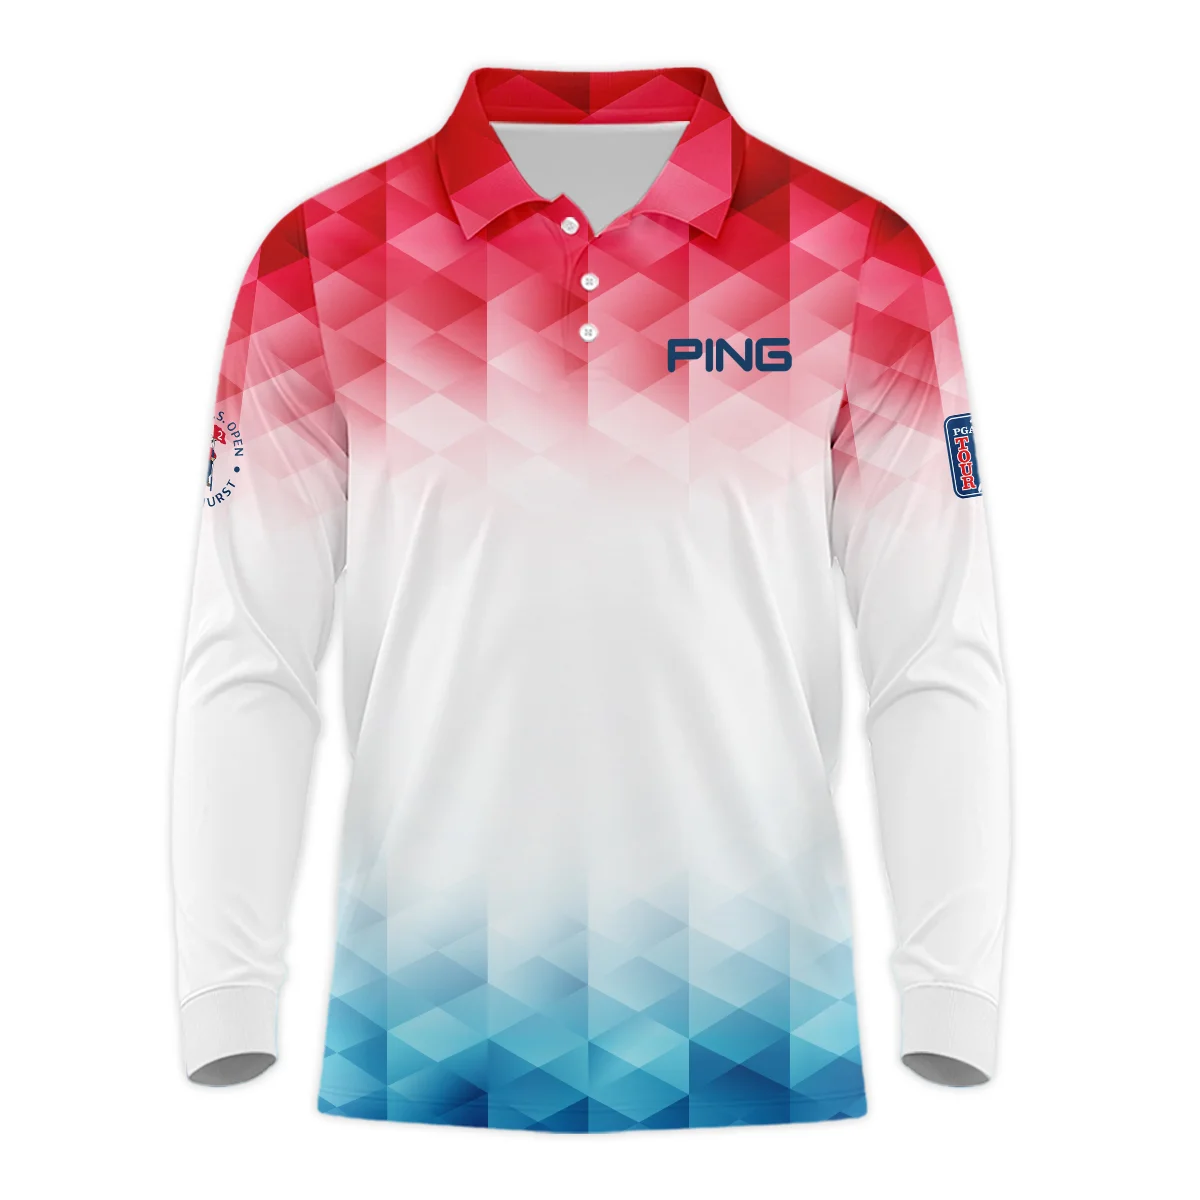 124th U.S. Open Pinehurst Ping Golf Sport Zipper Polo Shirt Blue Red Abstract Geometric Triangles All Over Print Zipper Polo Shirt For Men